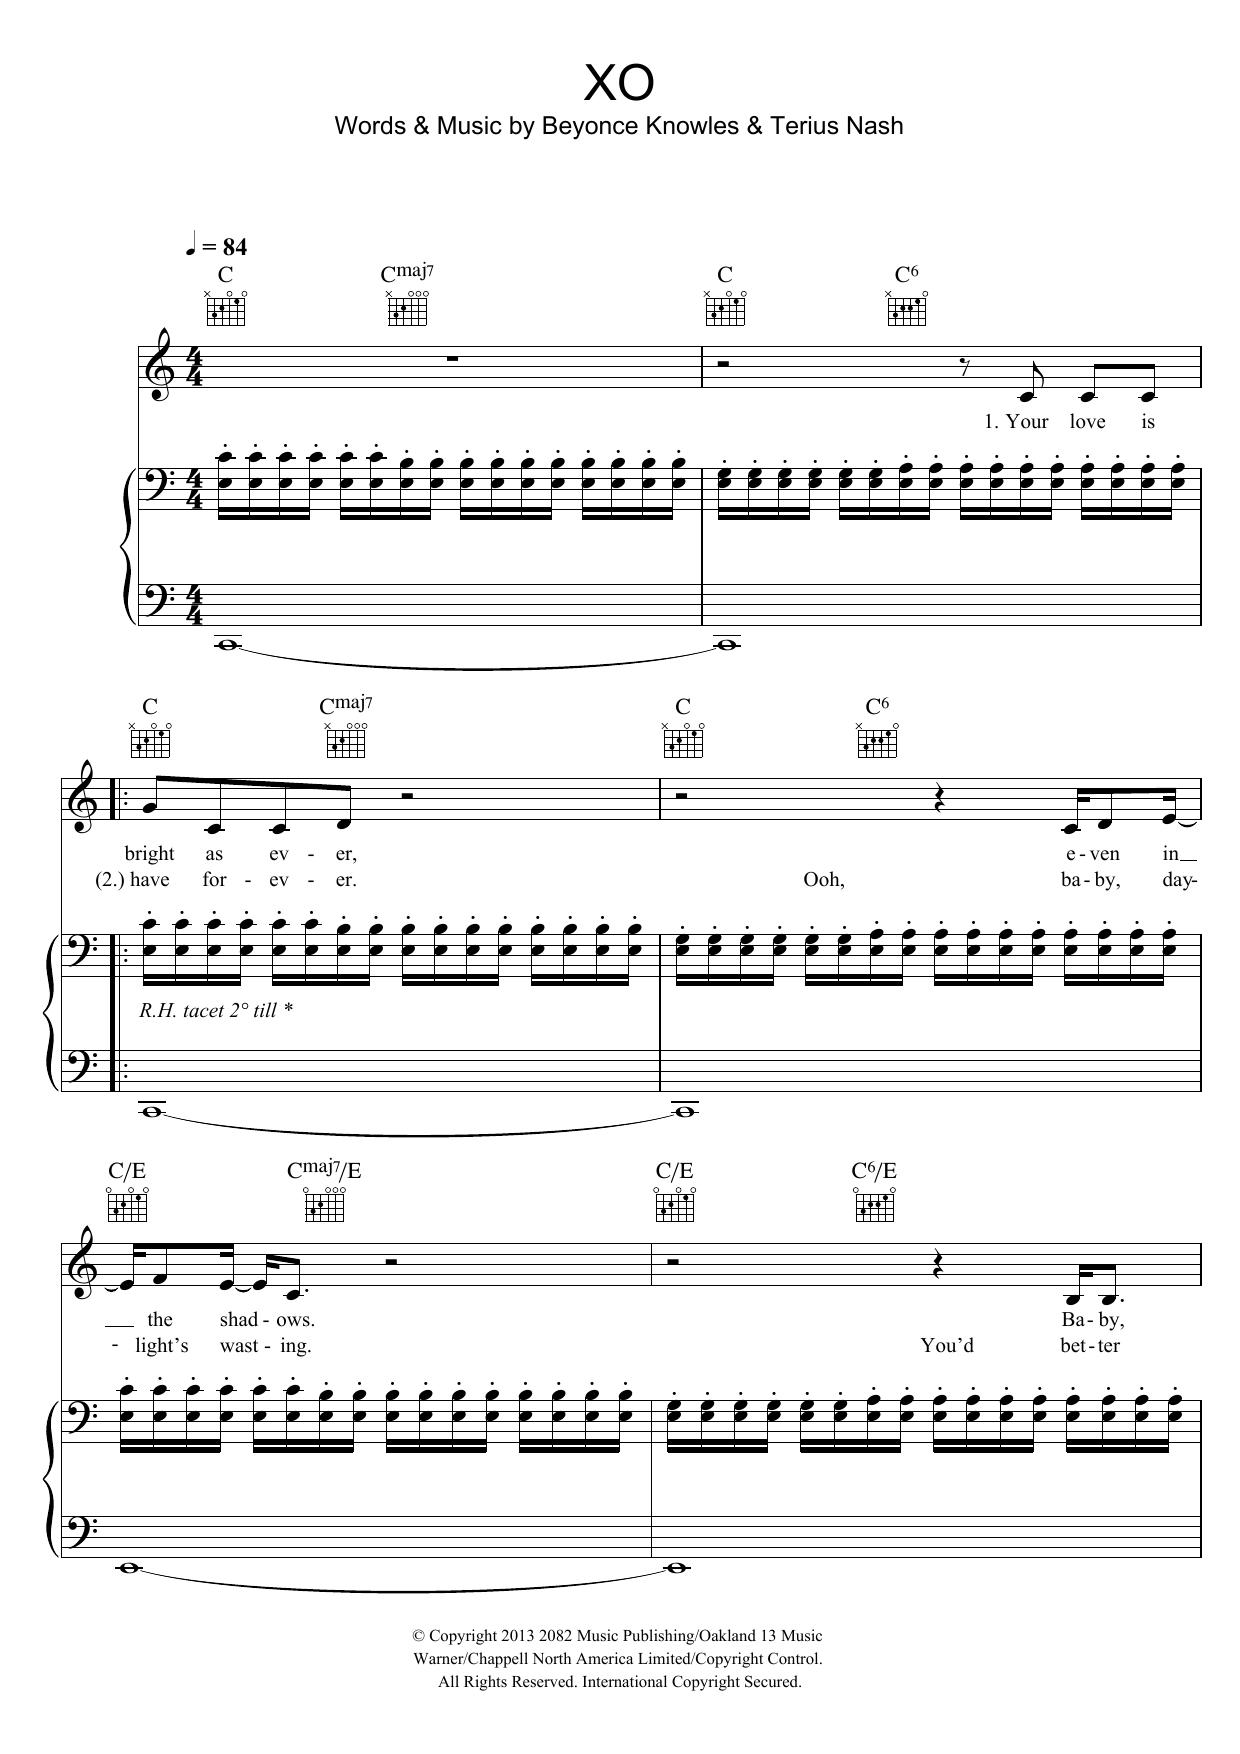 Beyoncé XO Sheet Music Notes & Chords for Piano, Vocal & Guitar - Download or Print PDF